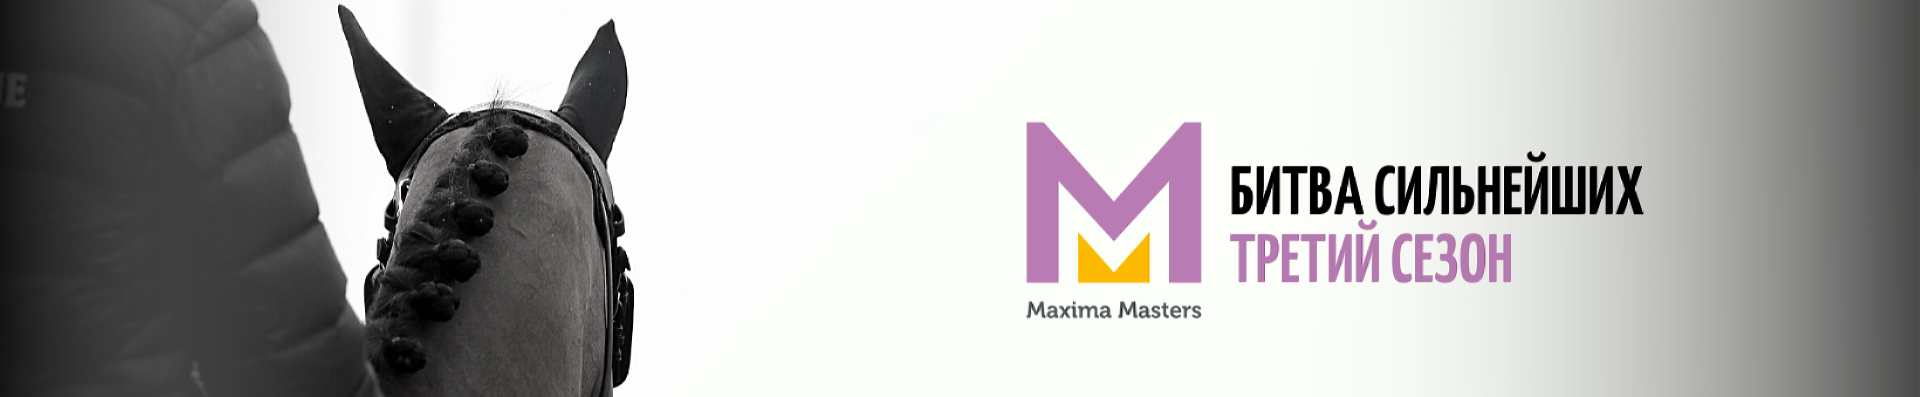 Maxima Masters - личный